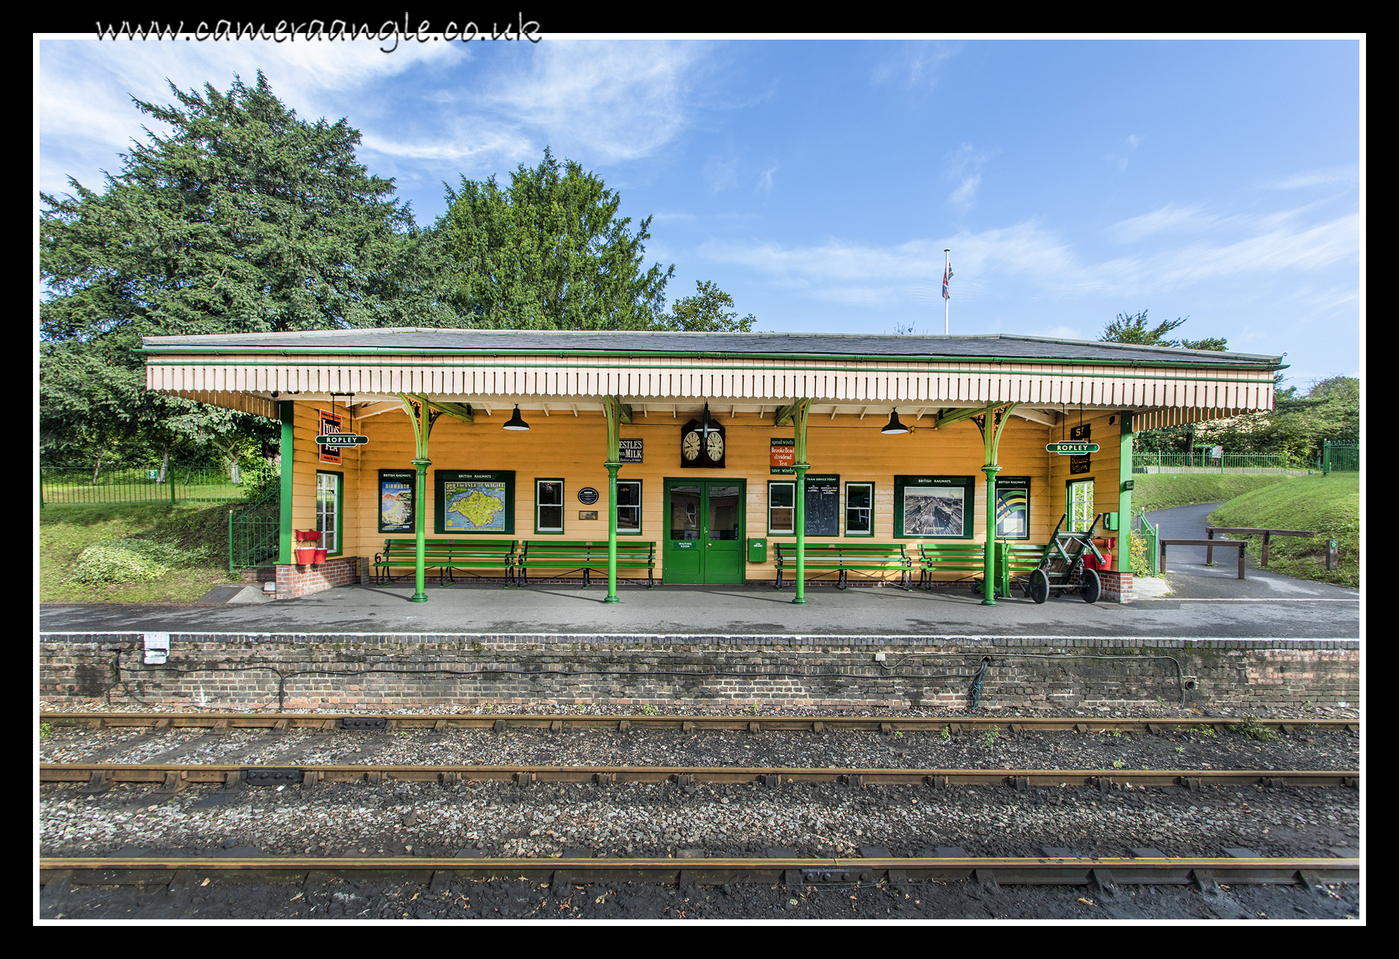 Ropley Station
Keywords: Ropley Station